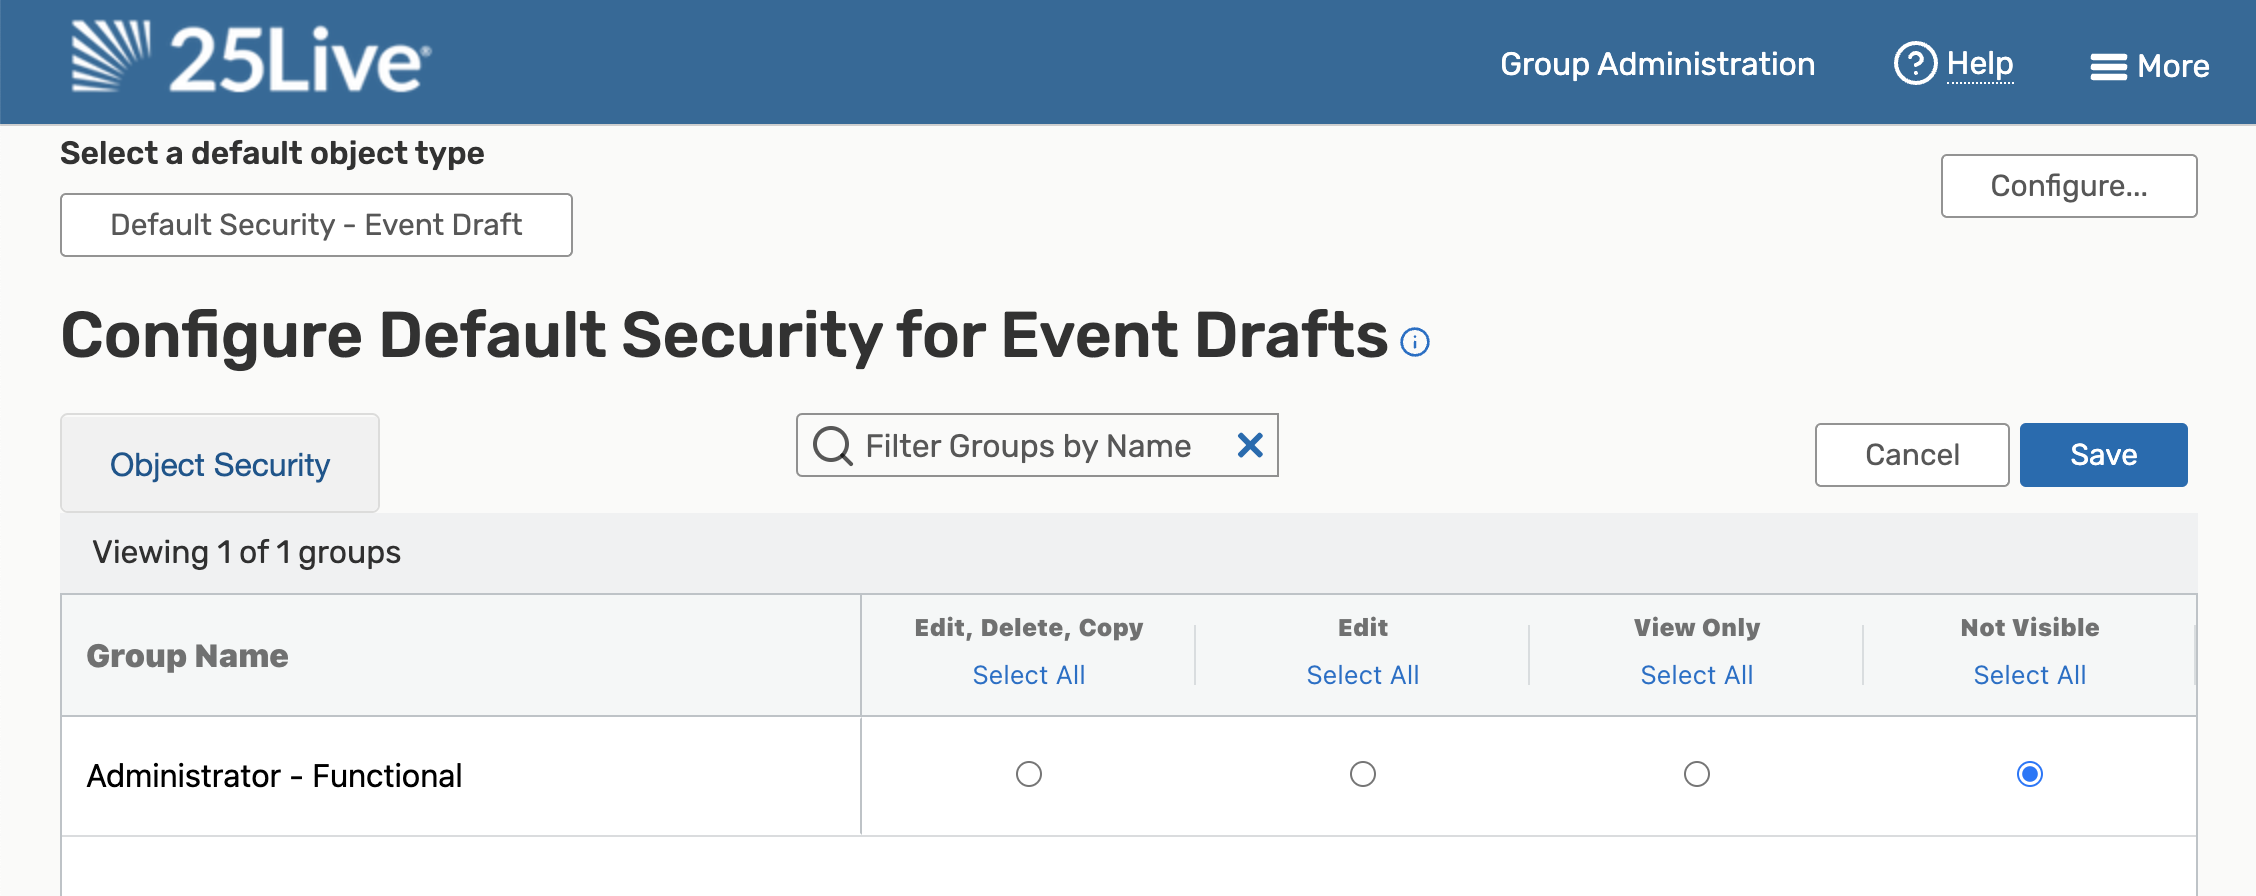 Event Draft default configuration options.